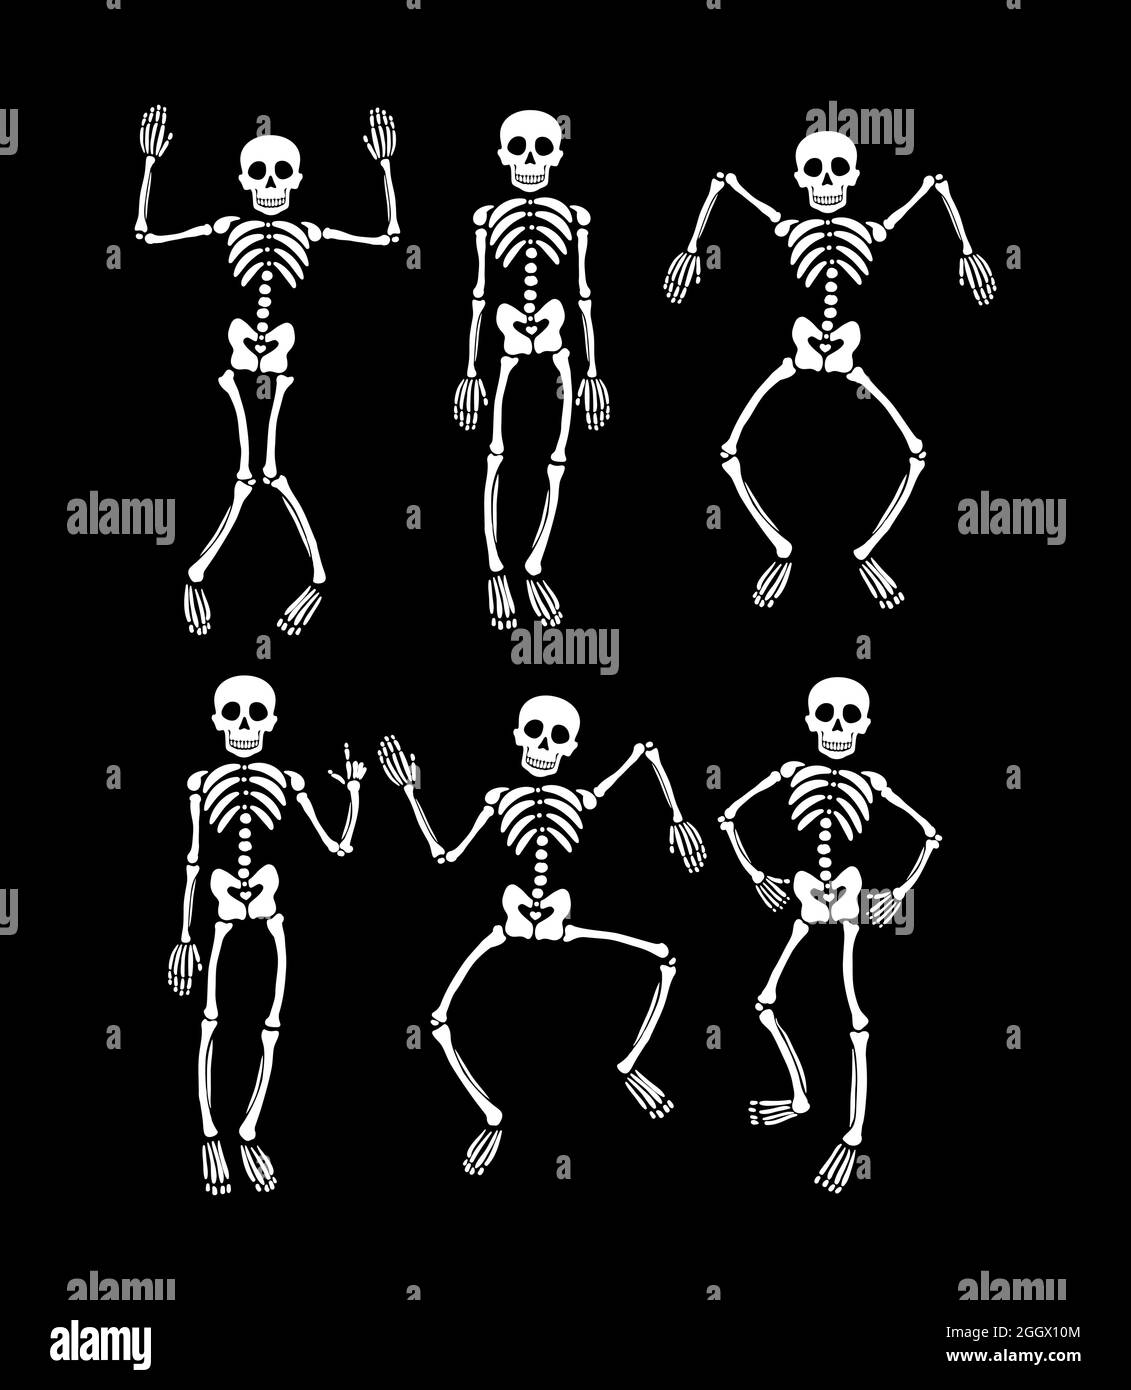 Funny skeleton Black and White Stock Photos & Images - Alamy